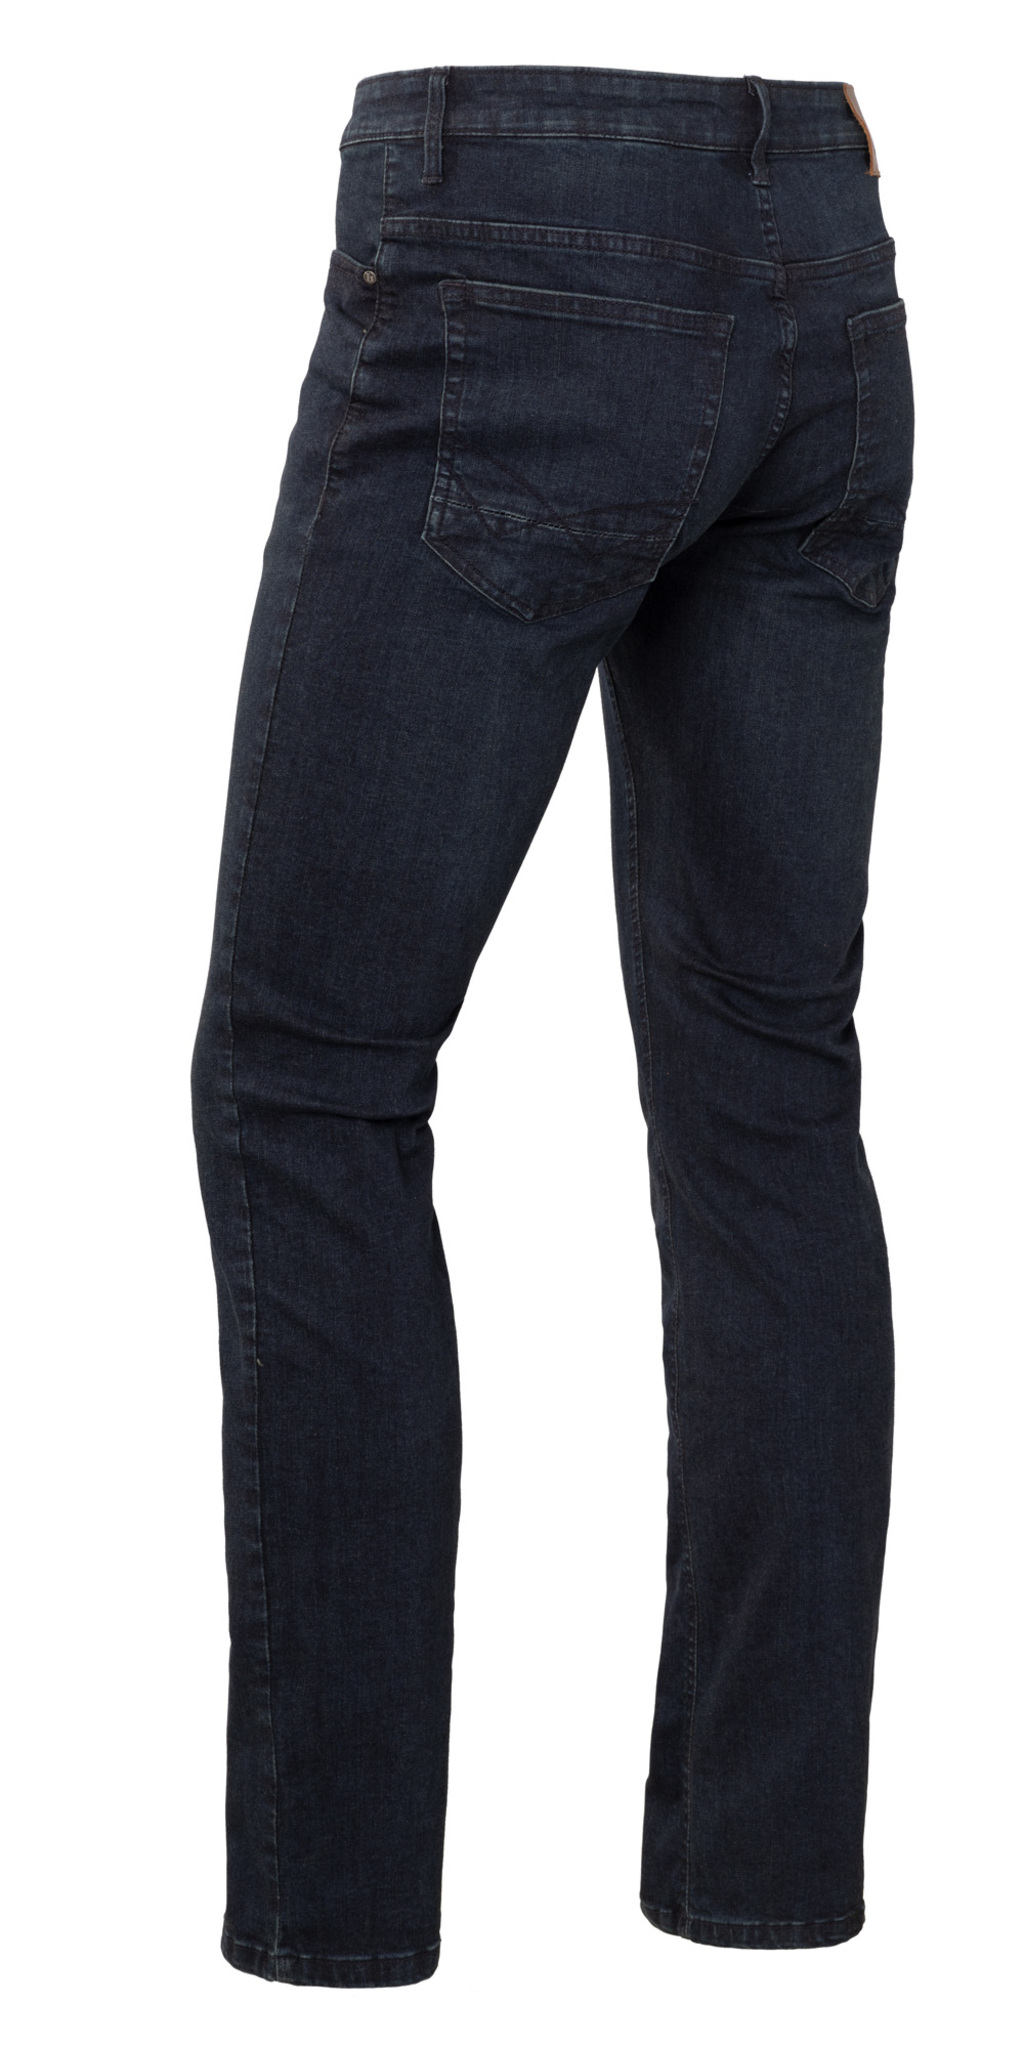 Heren jeans - Brams Paris - Danny - C90 - Lengte 32